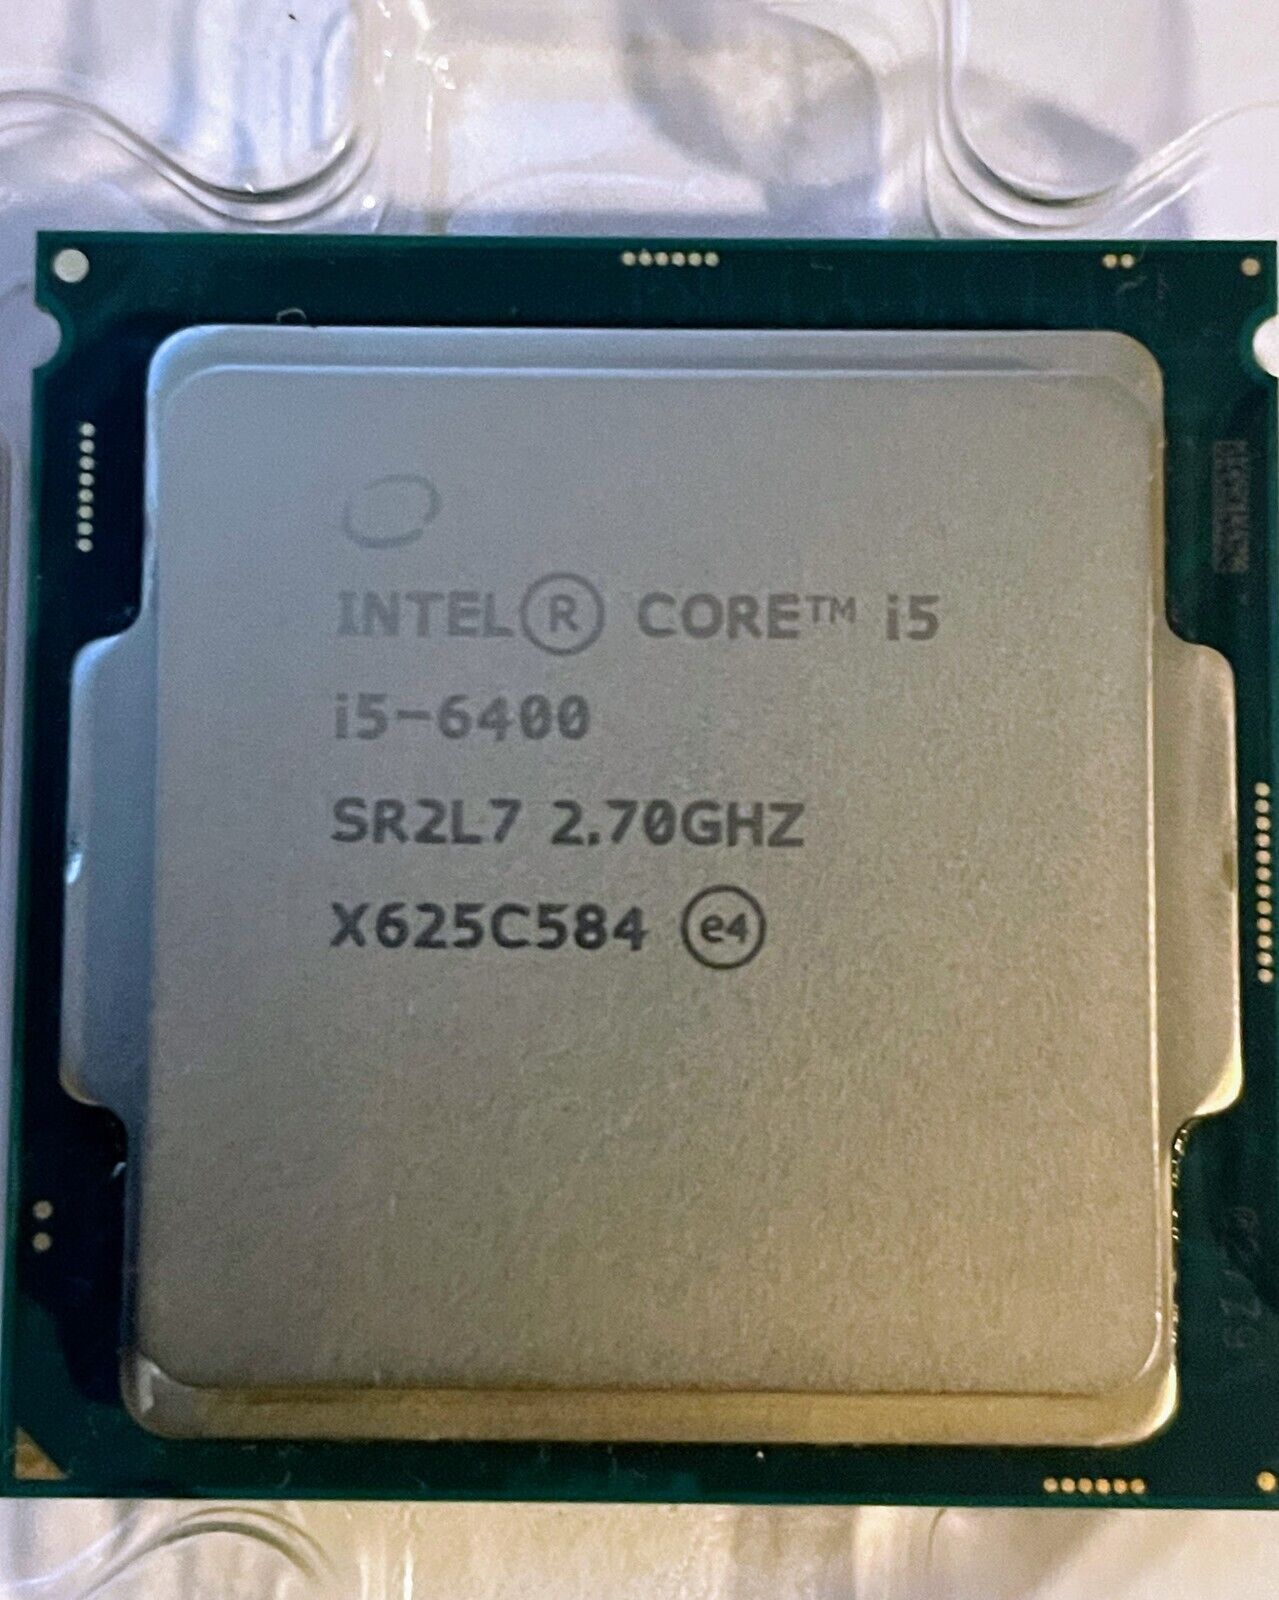 Intel Core i5-6400 2.70GHZ Processor CPU - 6th Gen / 4 Core / LGA 1151 - SR2L7